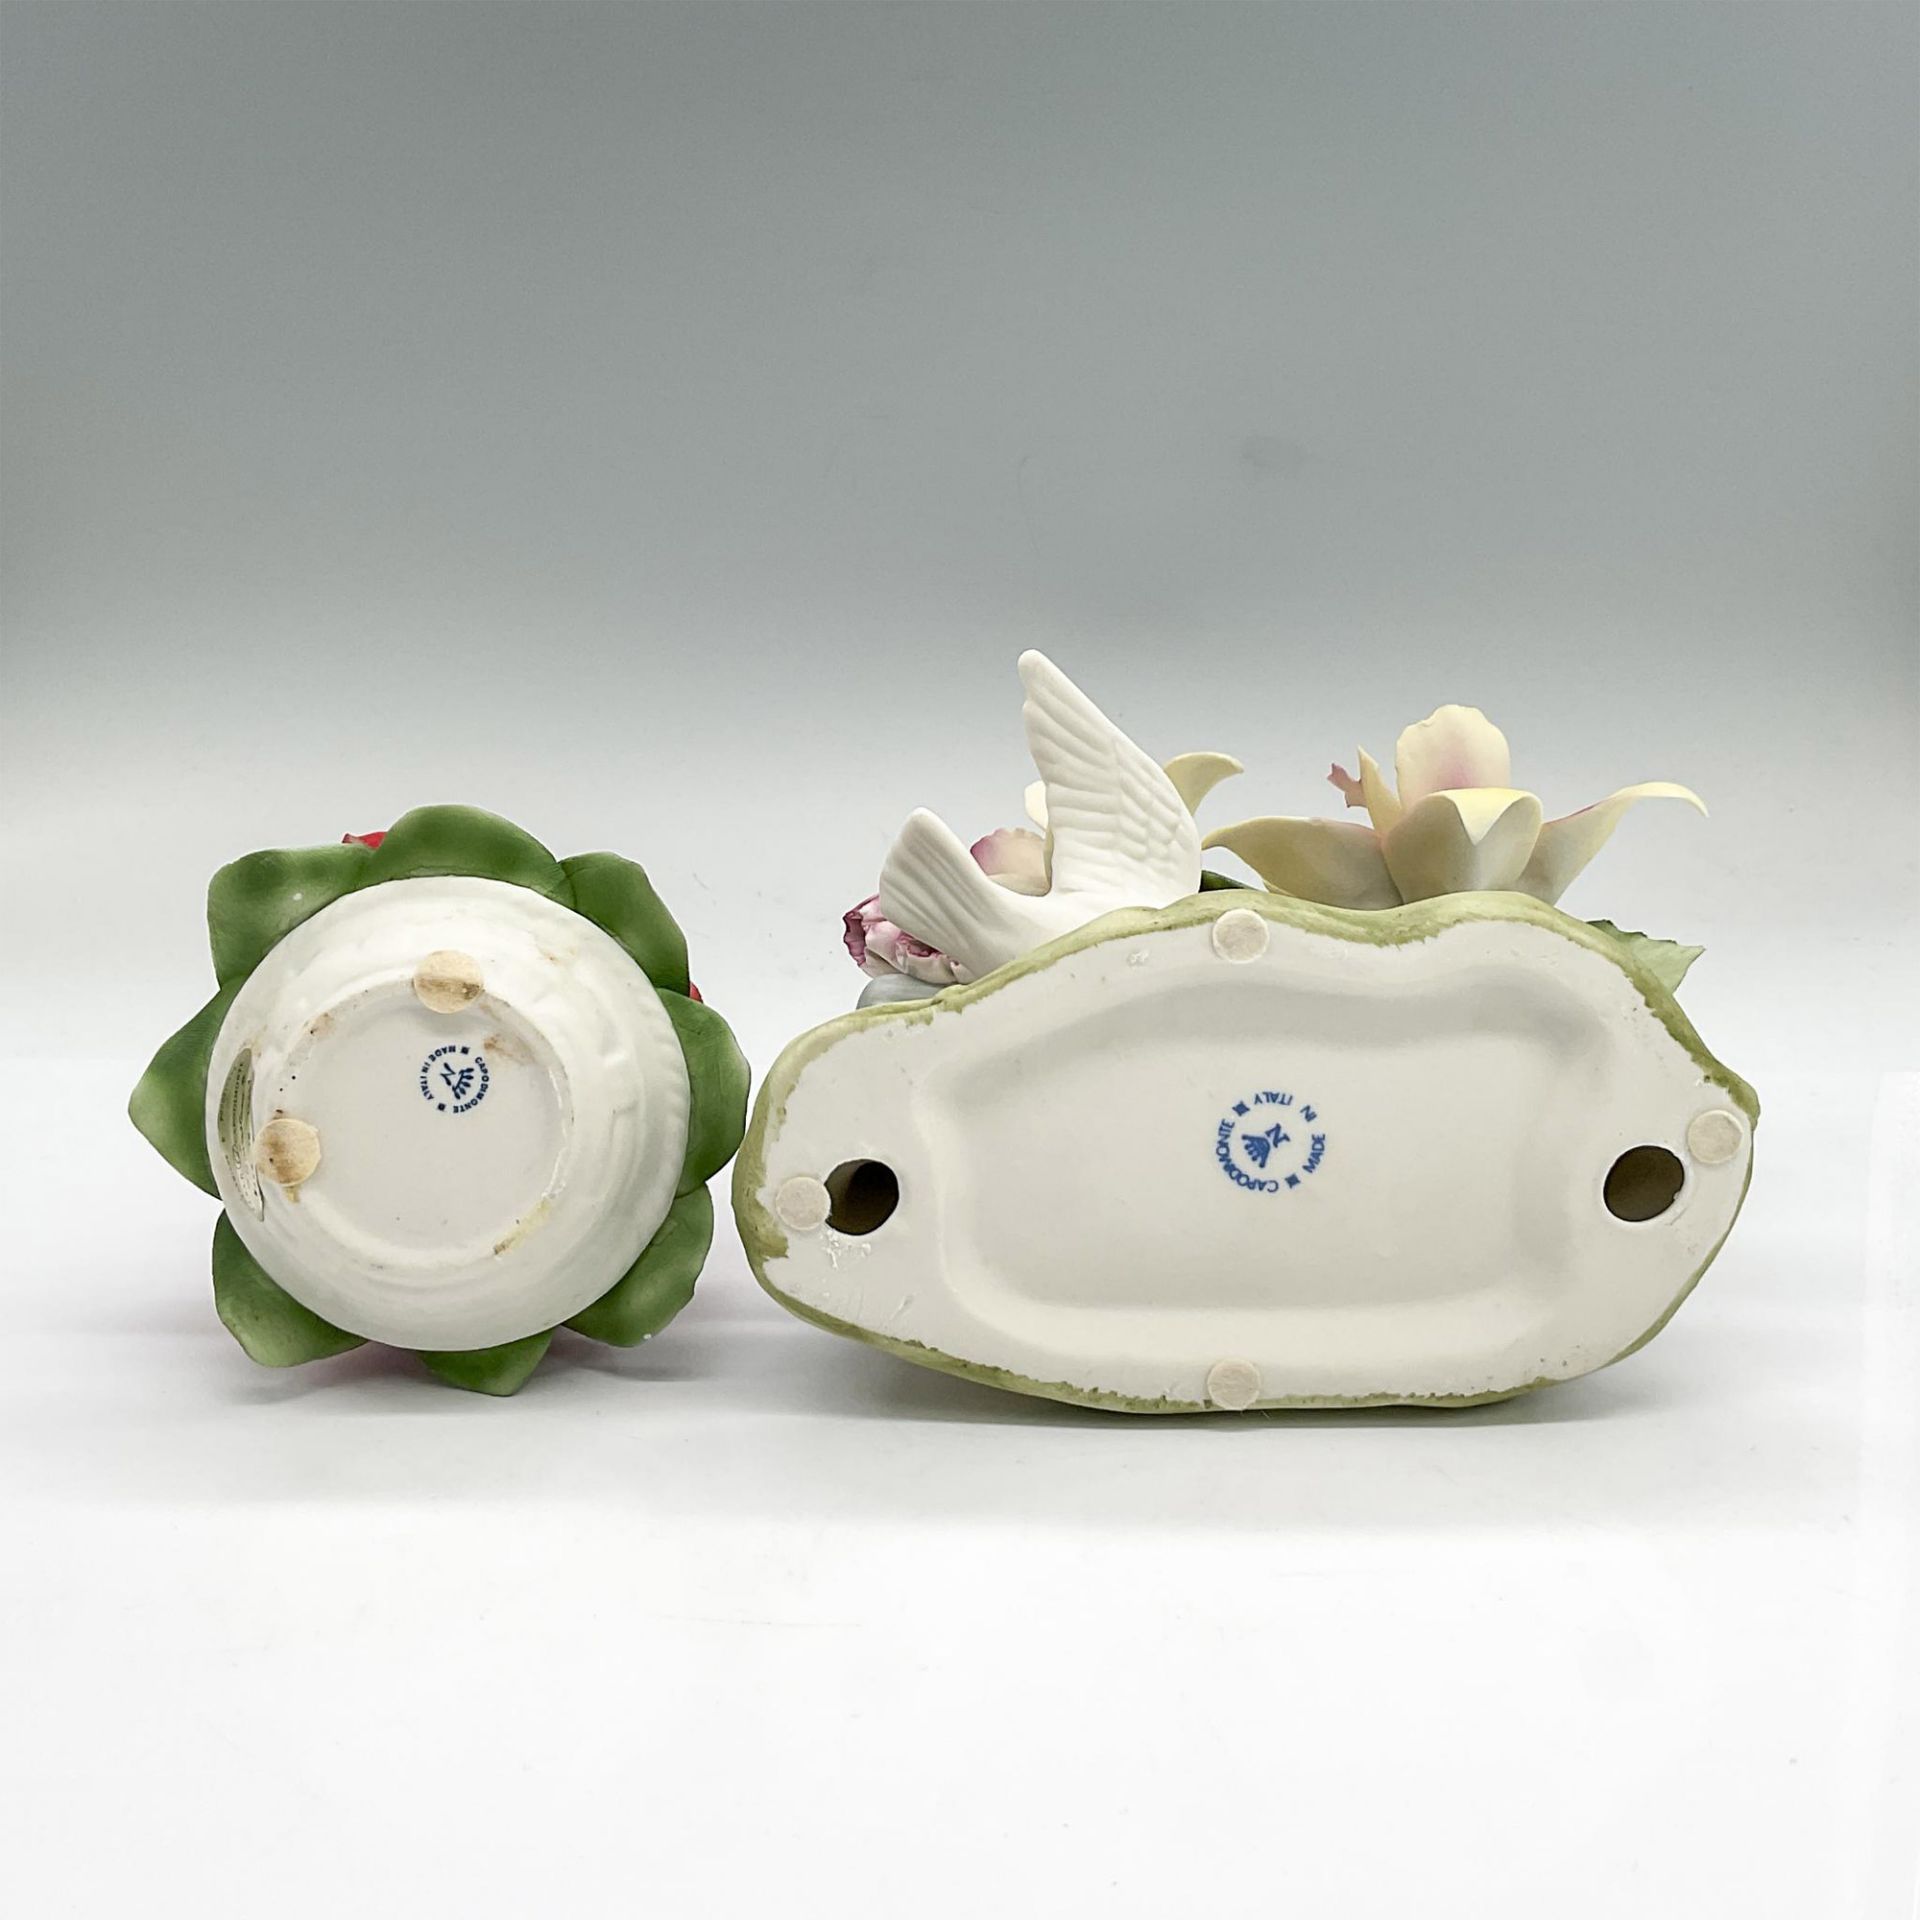 2pc Capodimonte Porcelain Figures, Roses + Dove w Orchids - Image 3 of 3